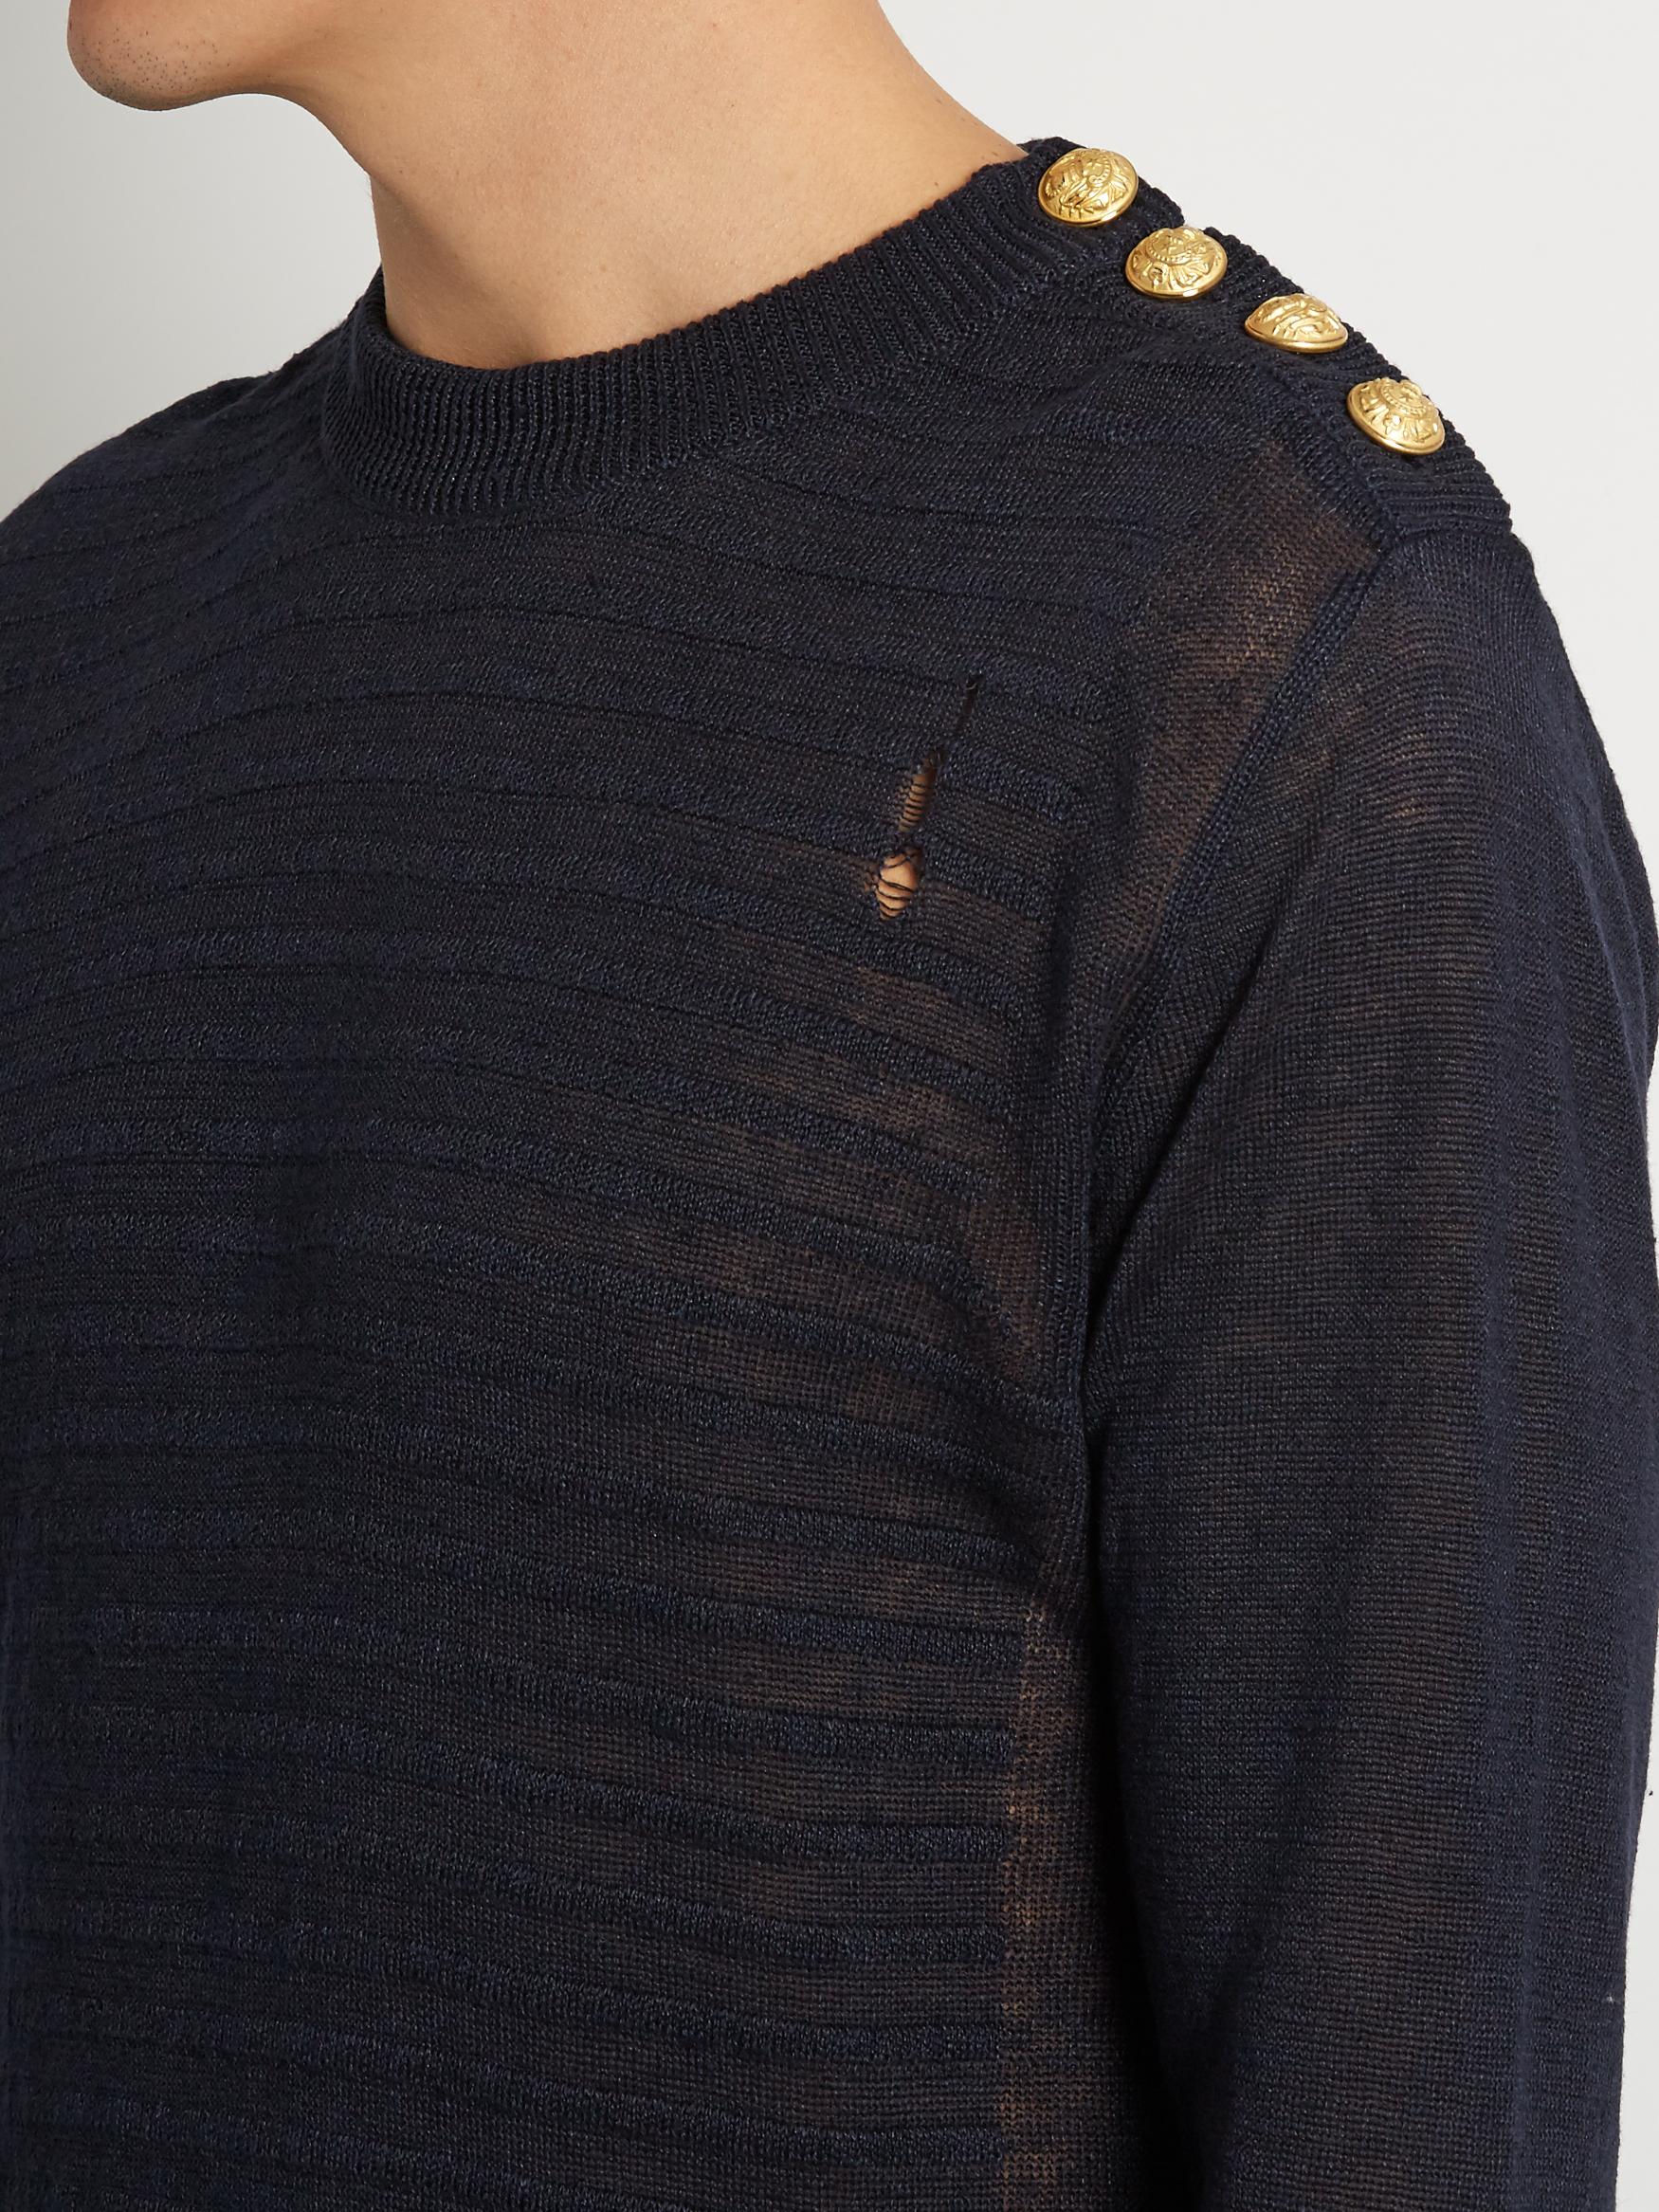 Lyst - Balmain Button-shoulder Distressed Linen Sweater in Blue for Men